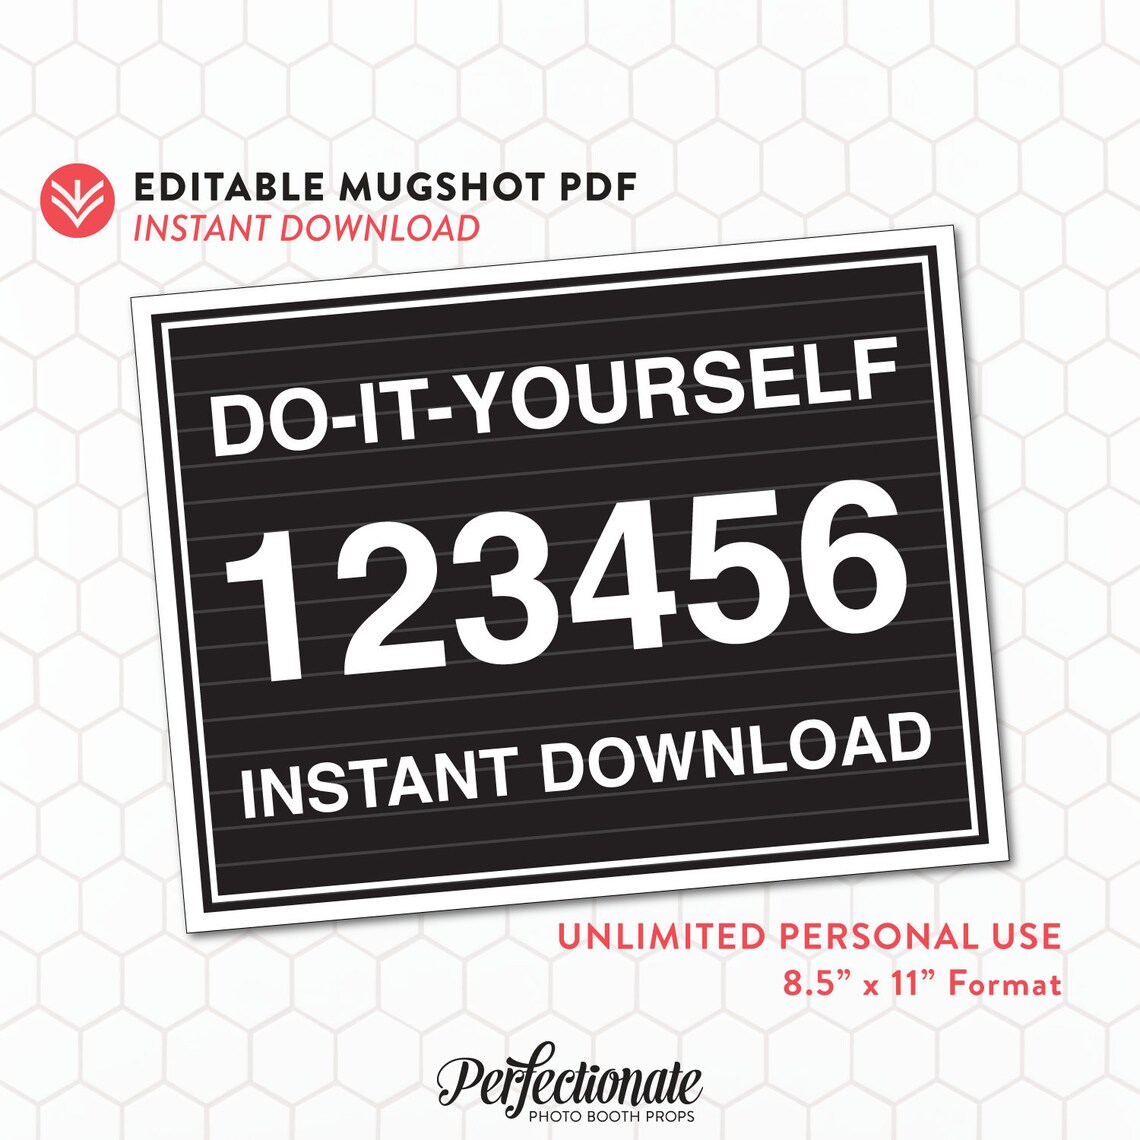 diy-mugshot-sign-mugshot-template-unlimited-personal-use-etsy